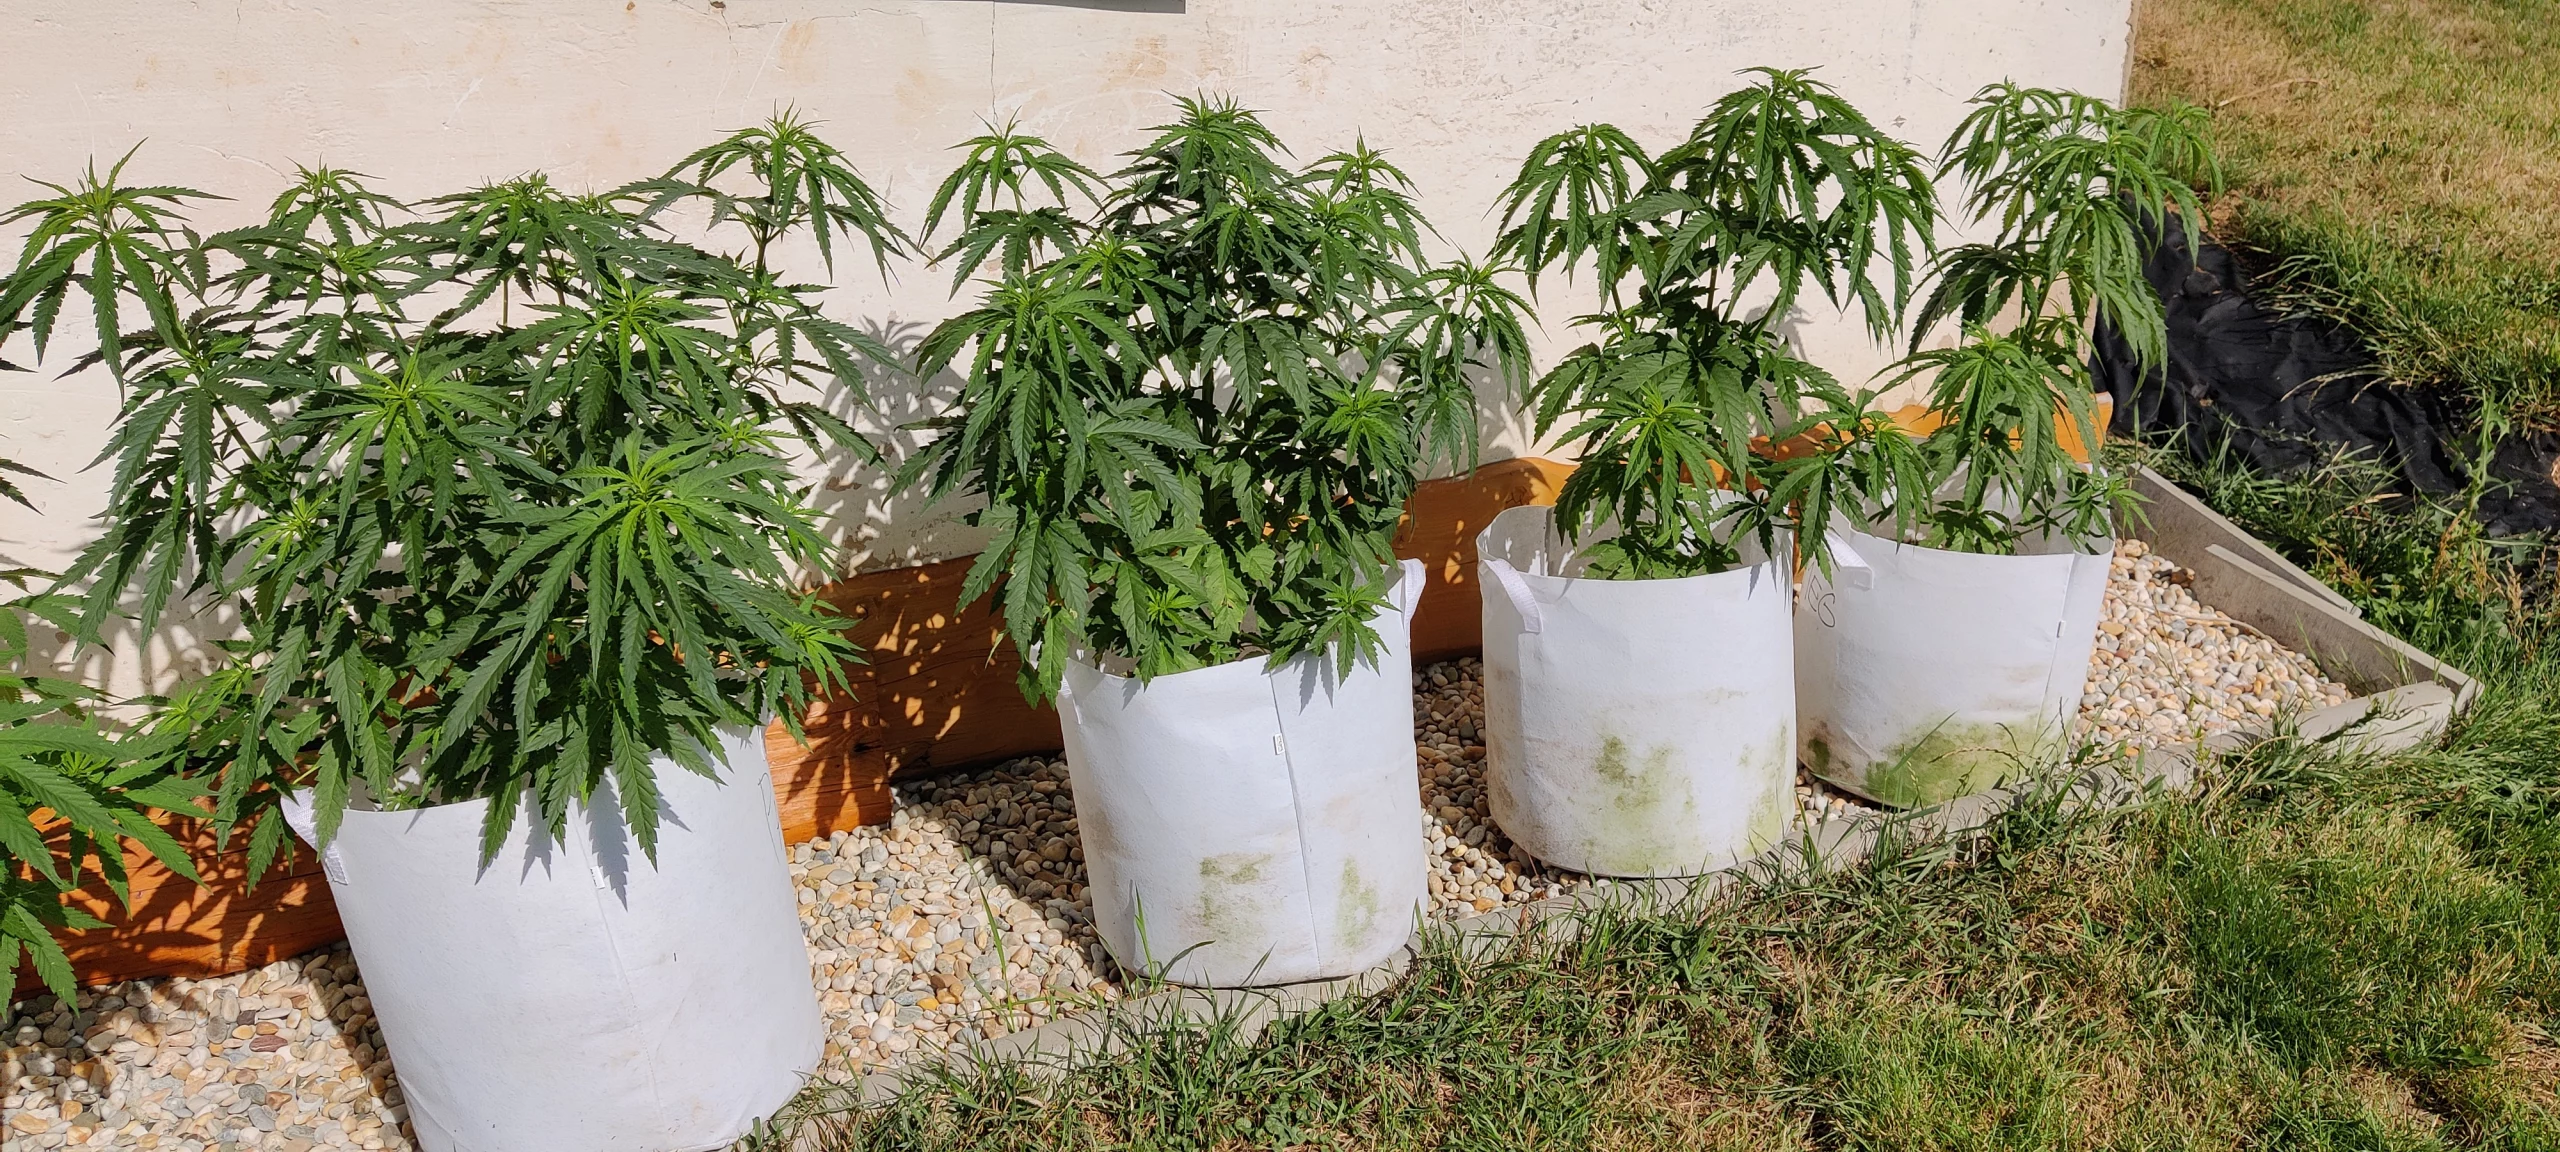 Nukaseeds strains in fabric flowerpots